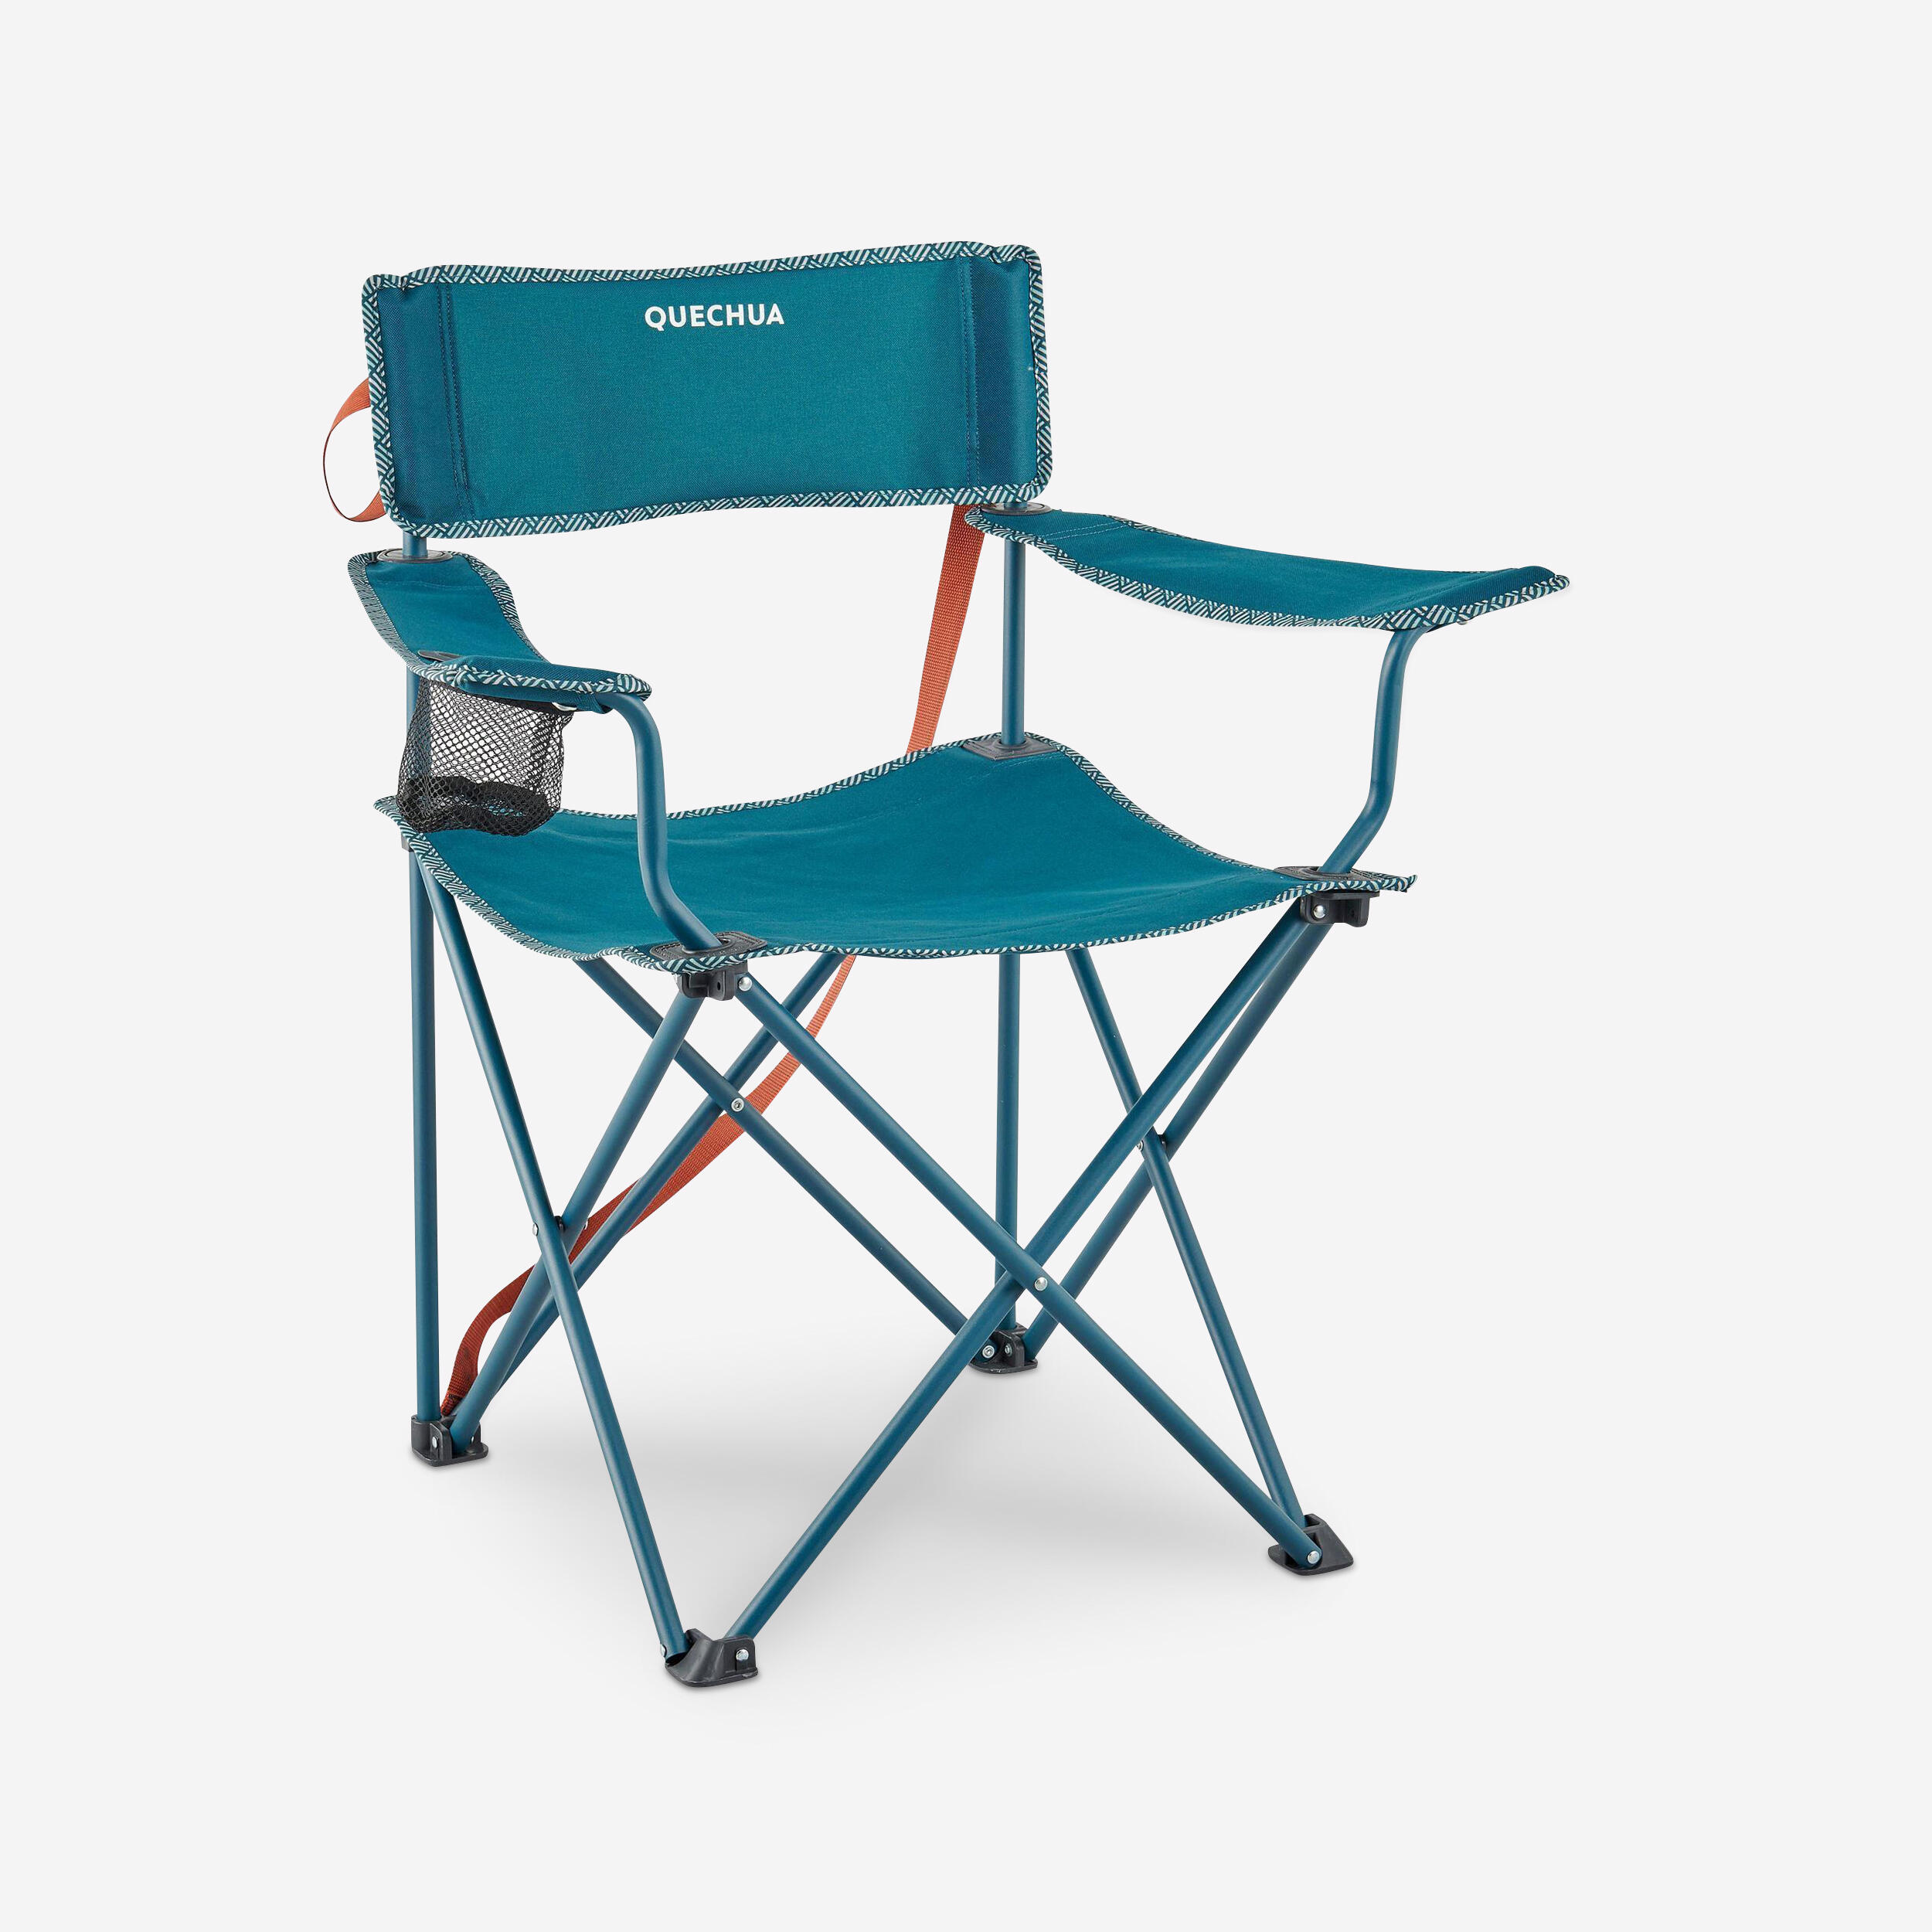 Folding Camping Chair - Blue - Dark petrol blue - Quechua - Decathlon